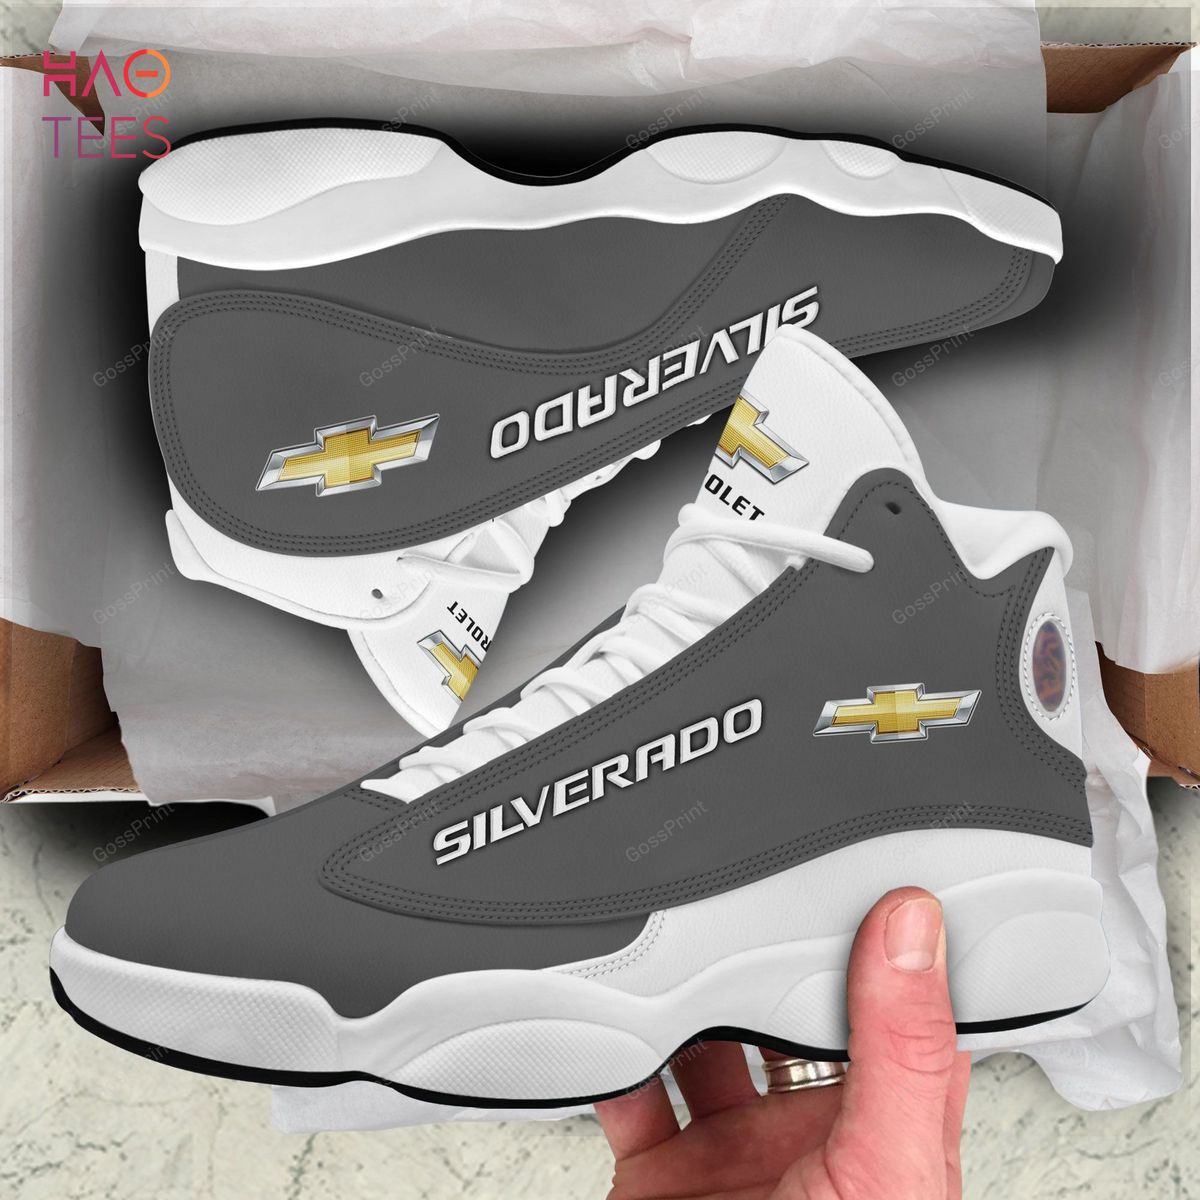 Chevrolet Silverado Air Jordan 13 Gray Shoes, Sneaker